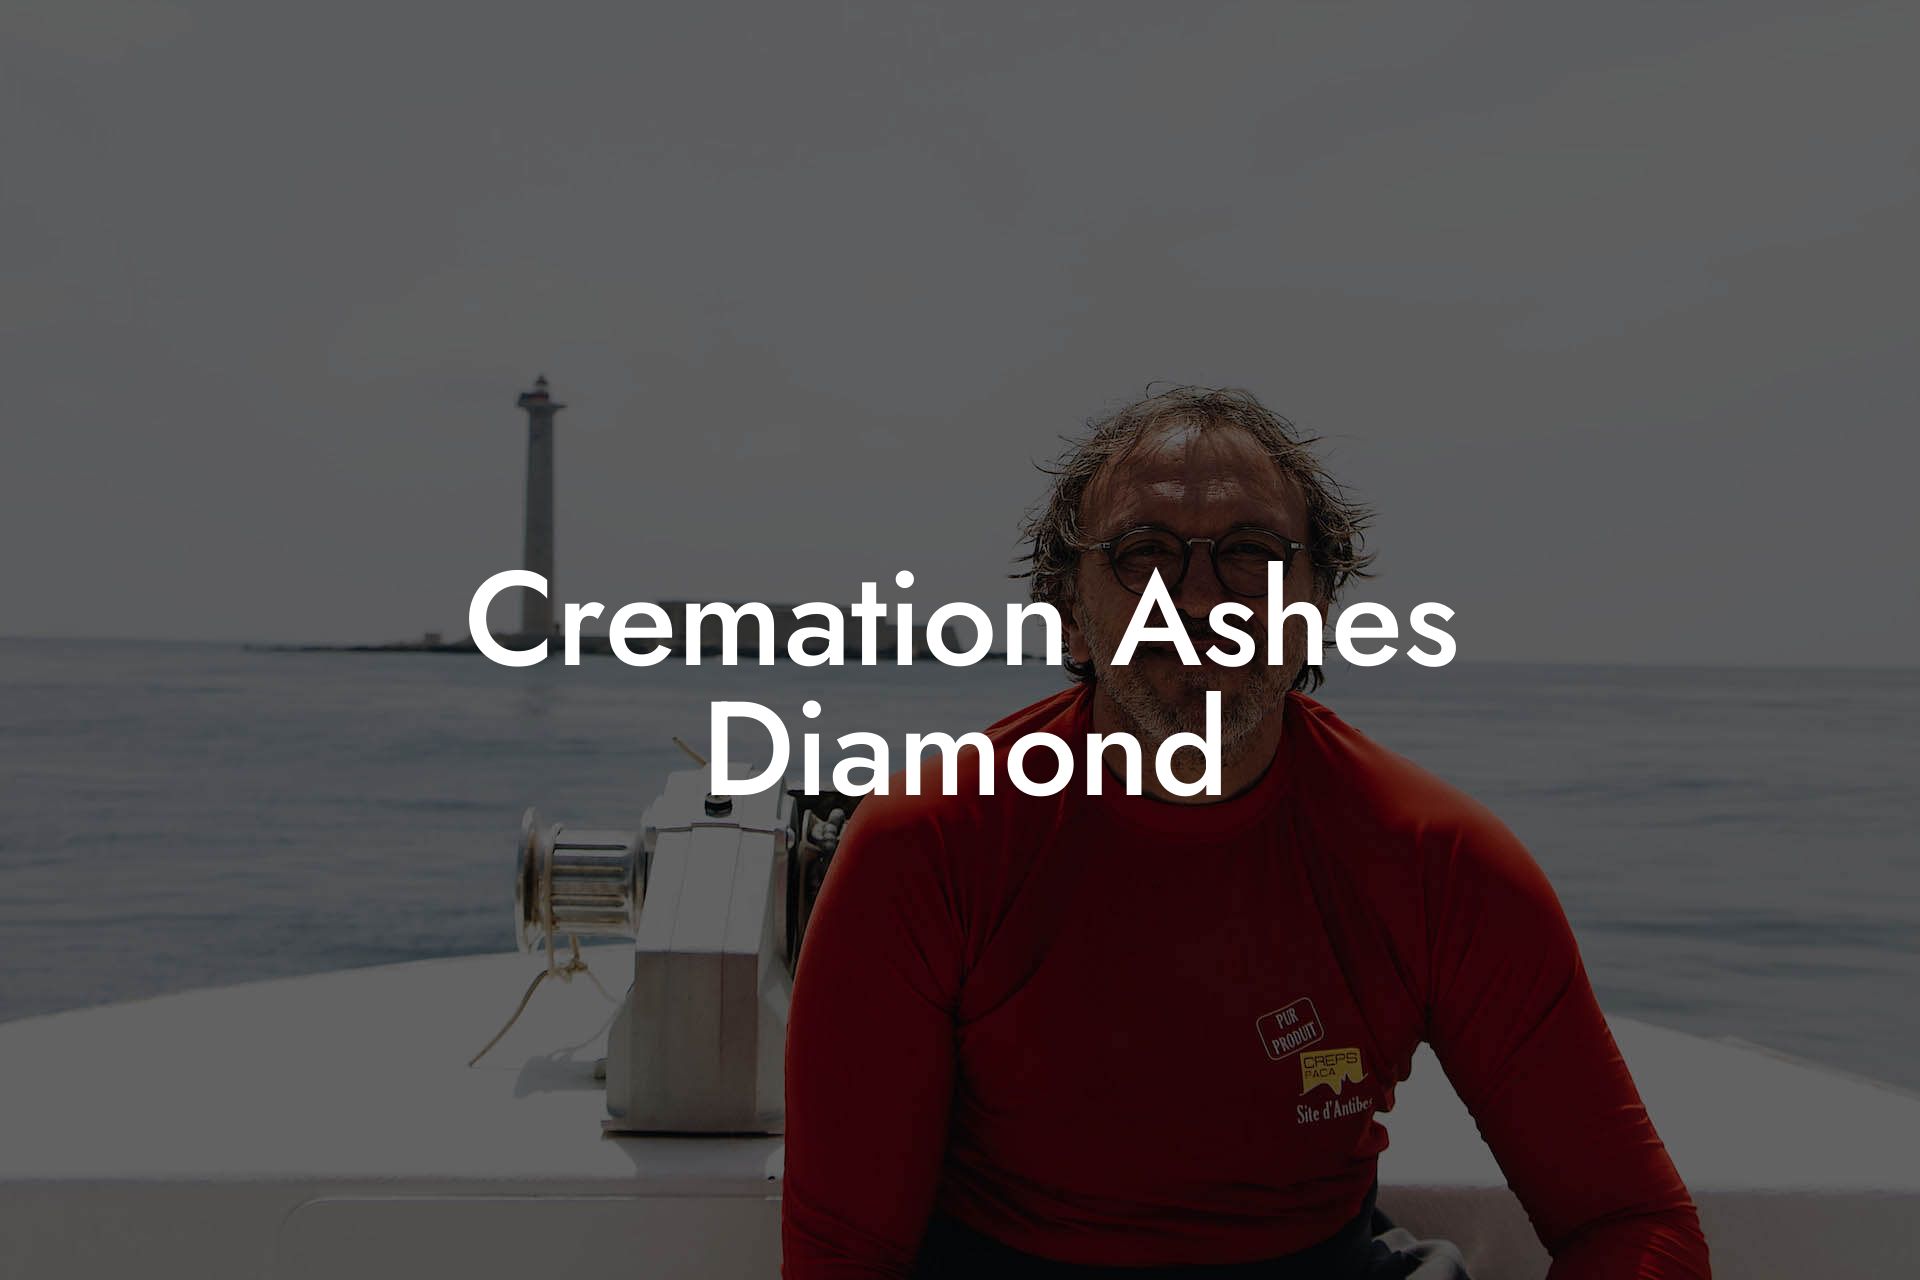 Cremation Ashes Diamond